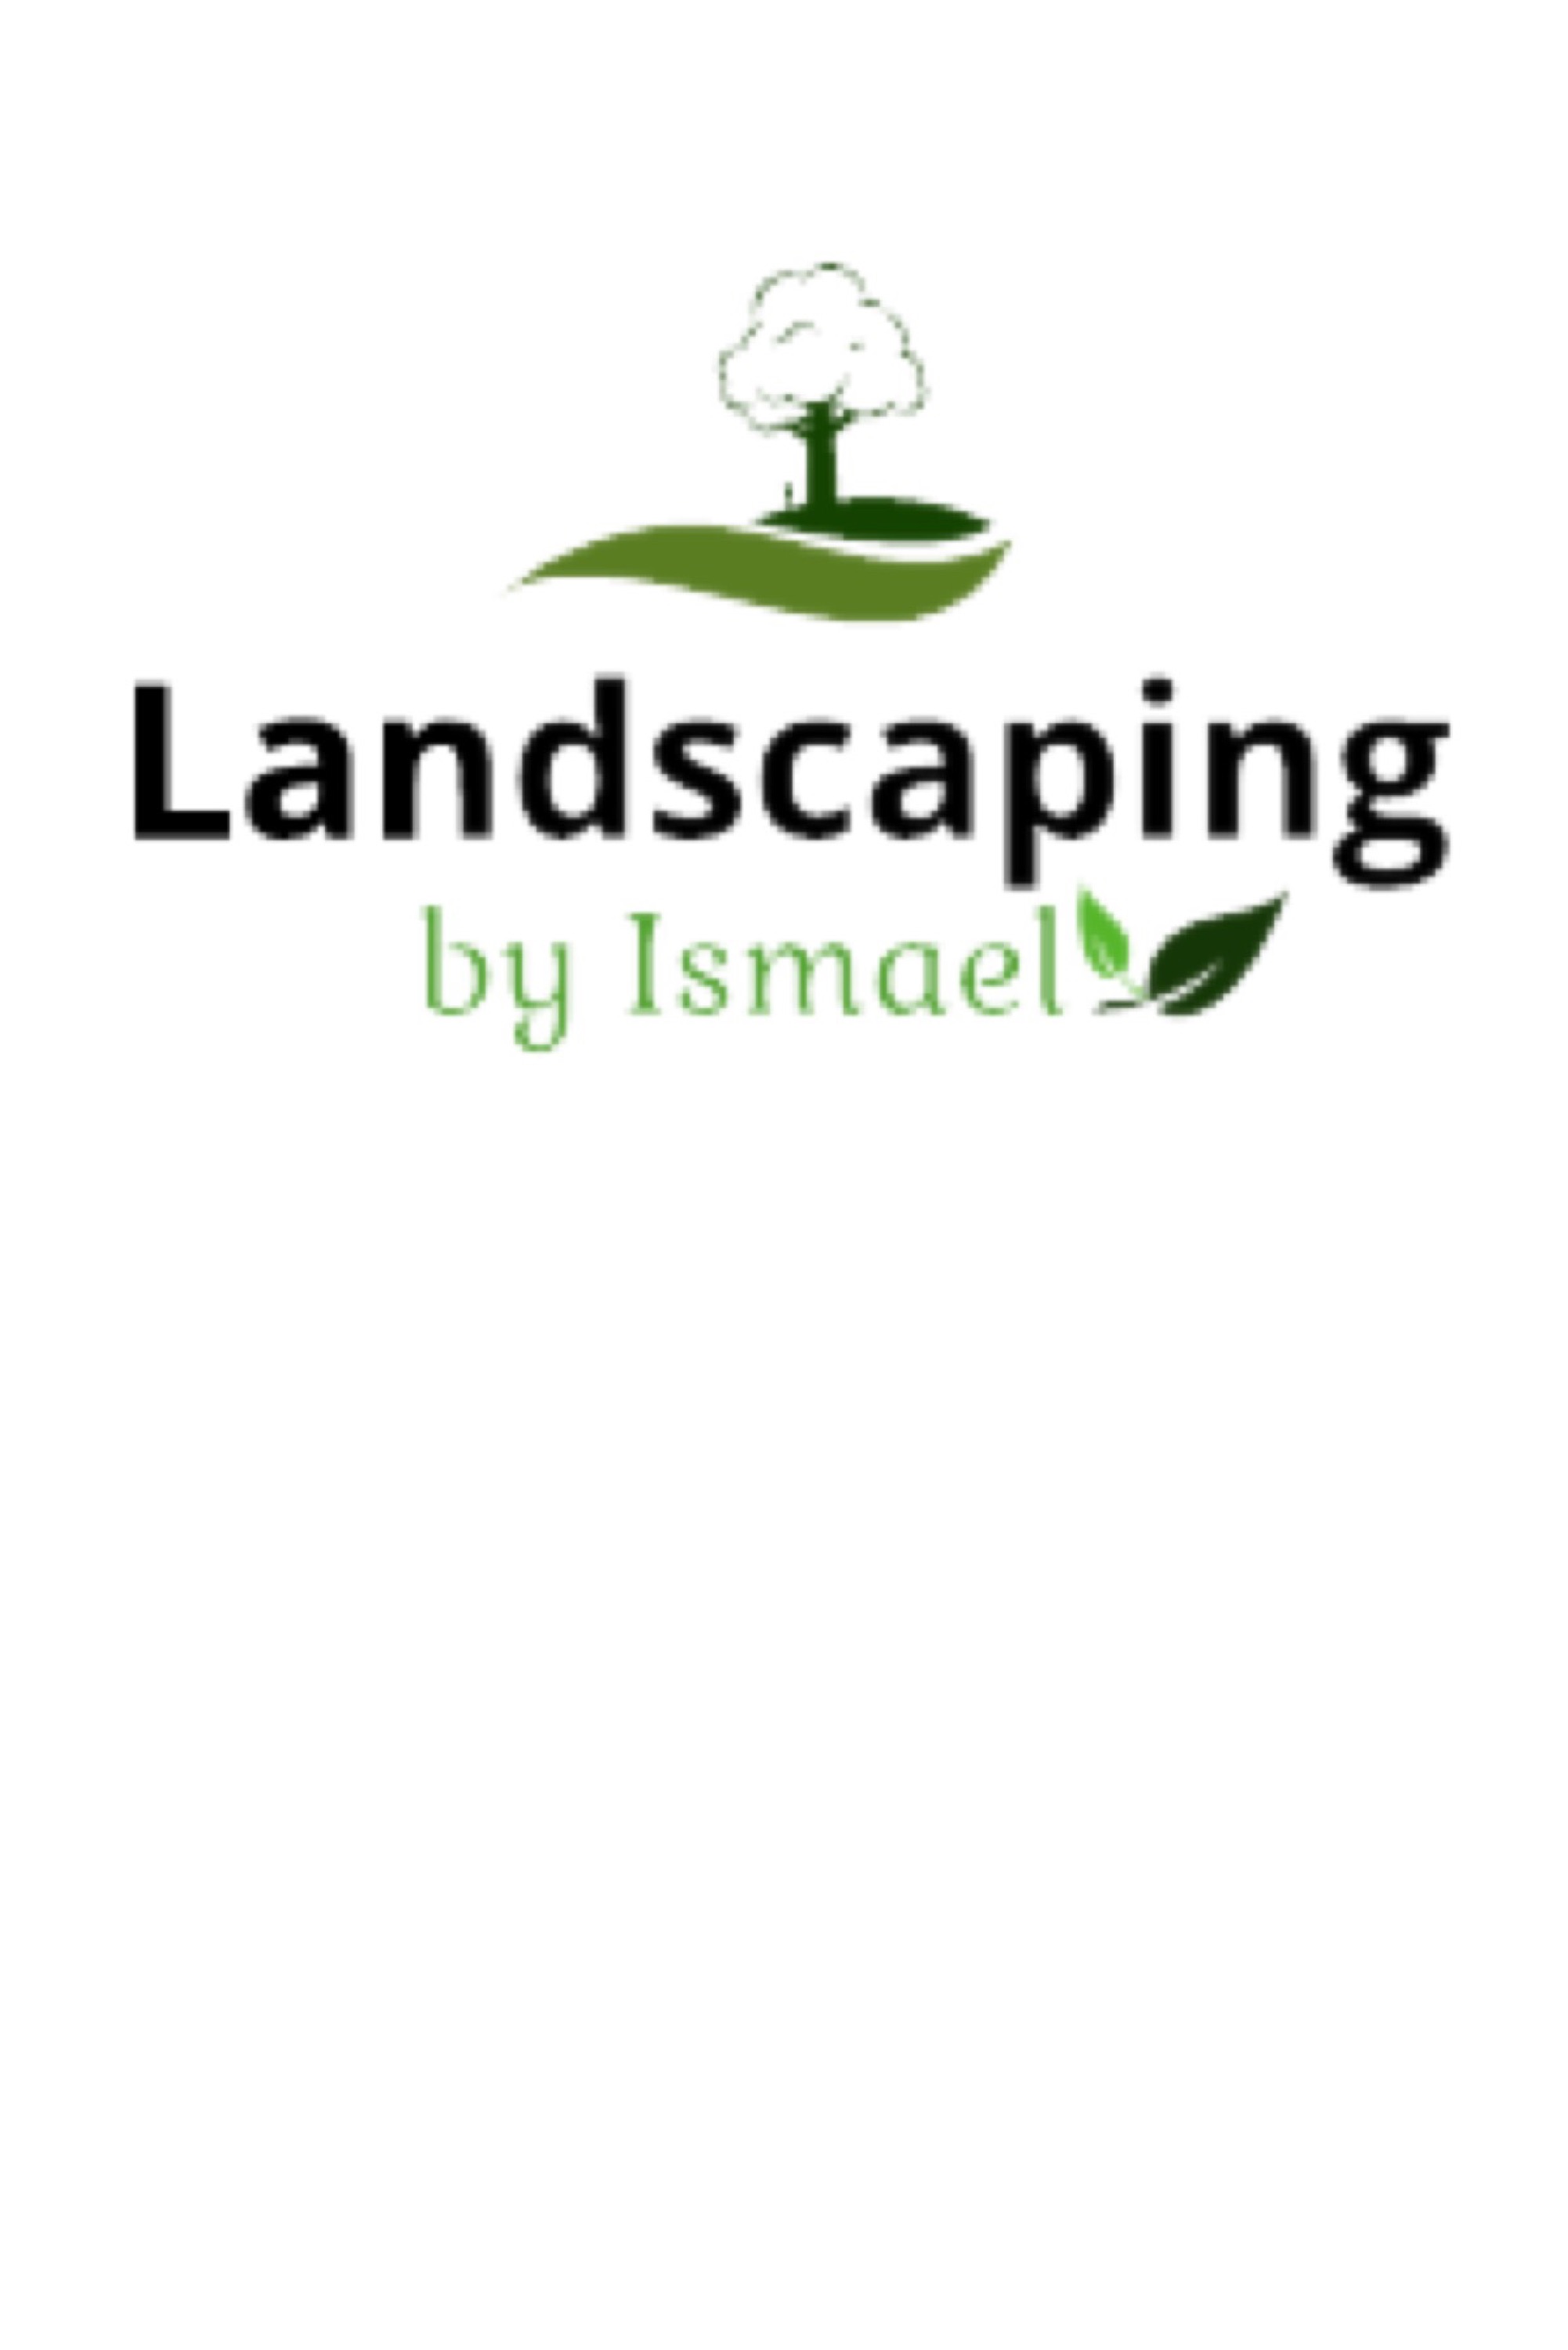 Landscaping & Maintenance by Ismael Logo